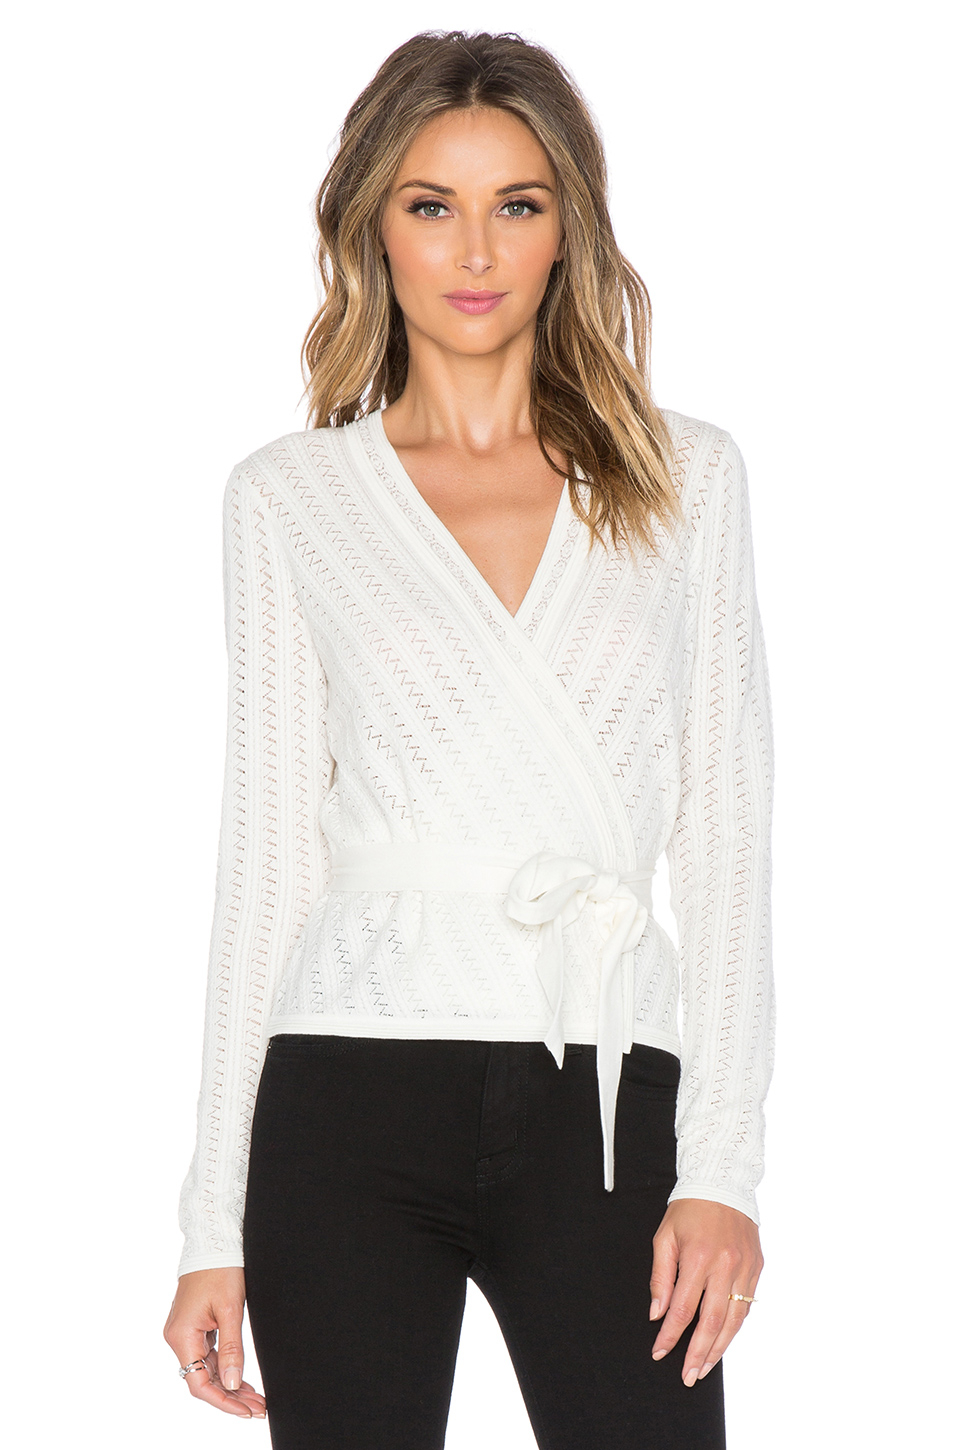 White wrap sweater dress shirts boutique